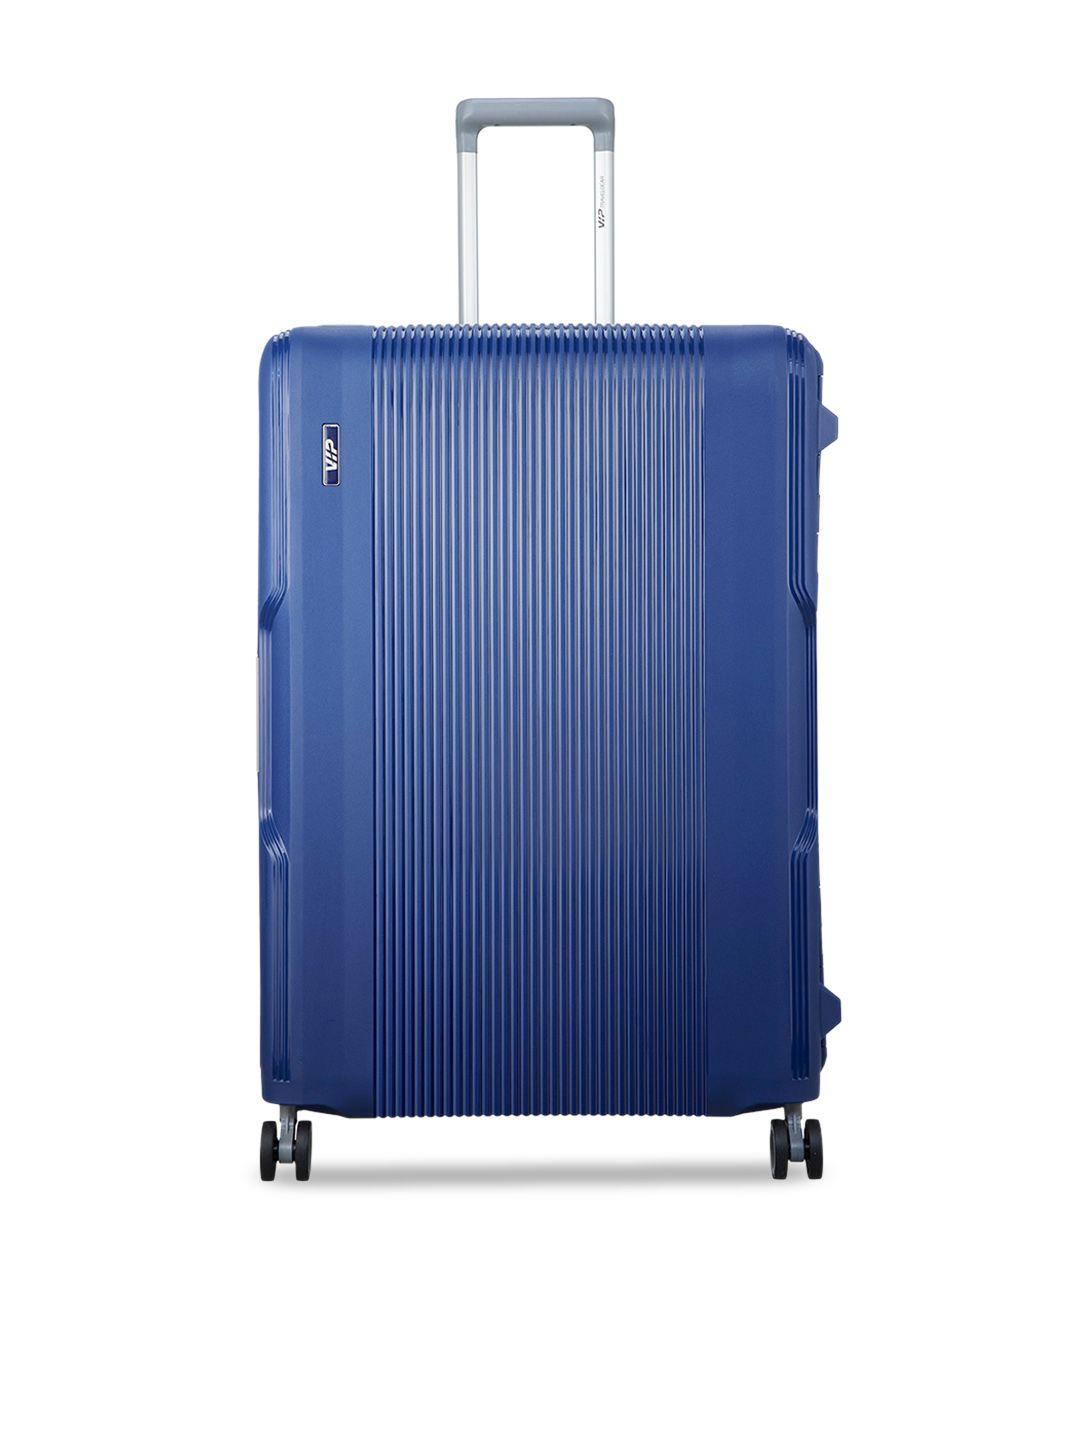 vip unisex textured maestronxt hard-sided large luggage strolley suitcase